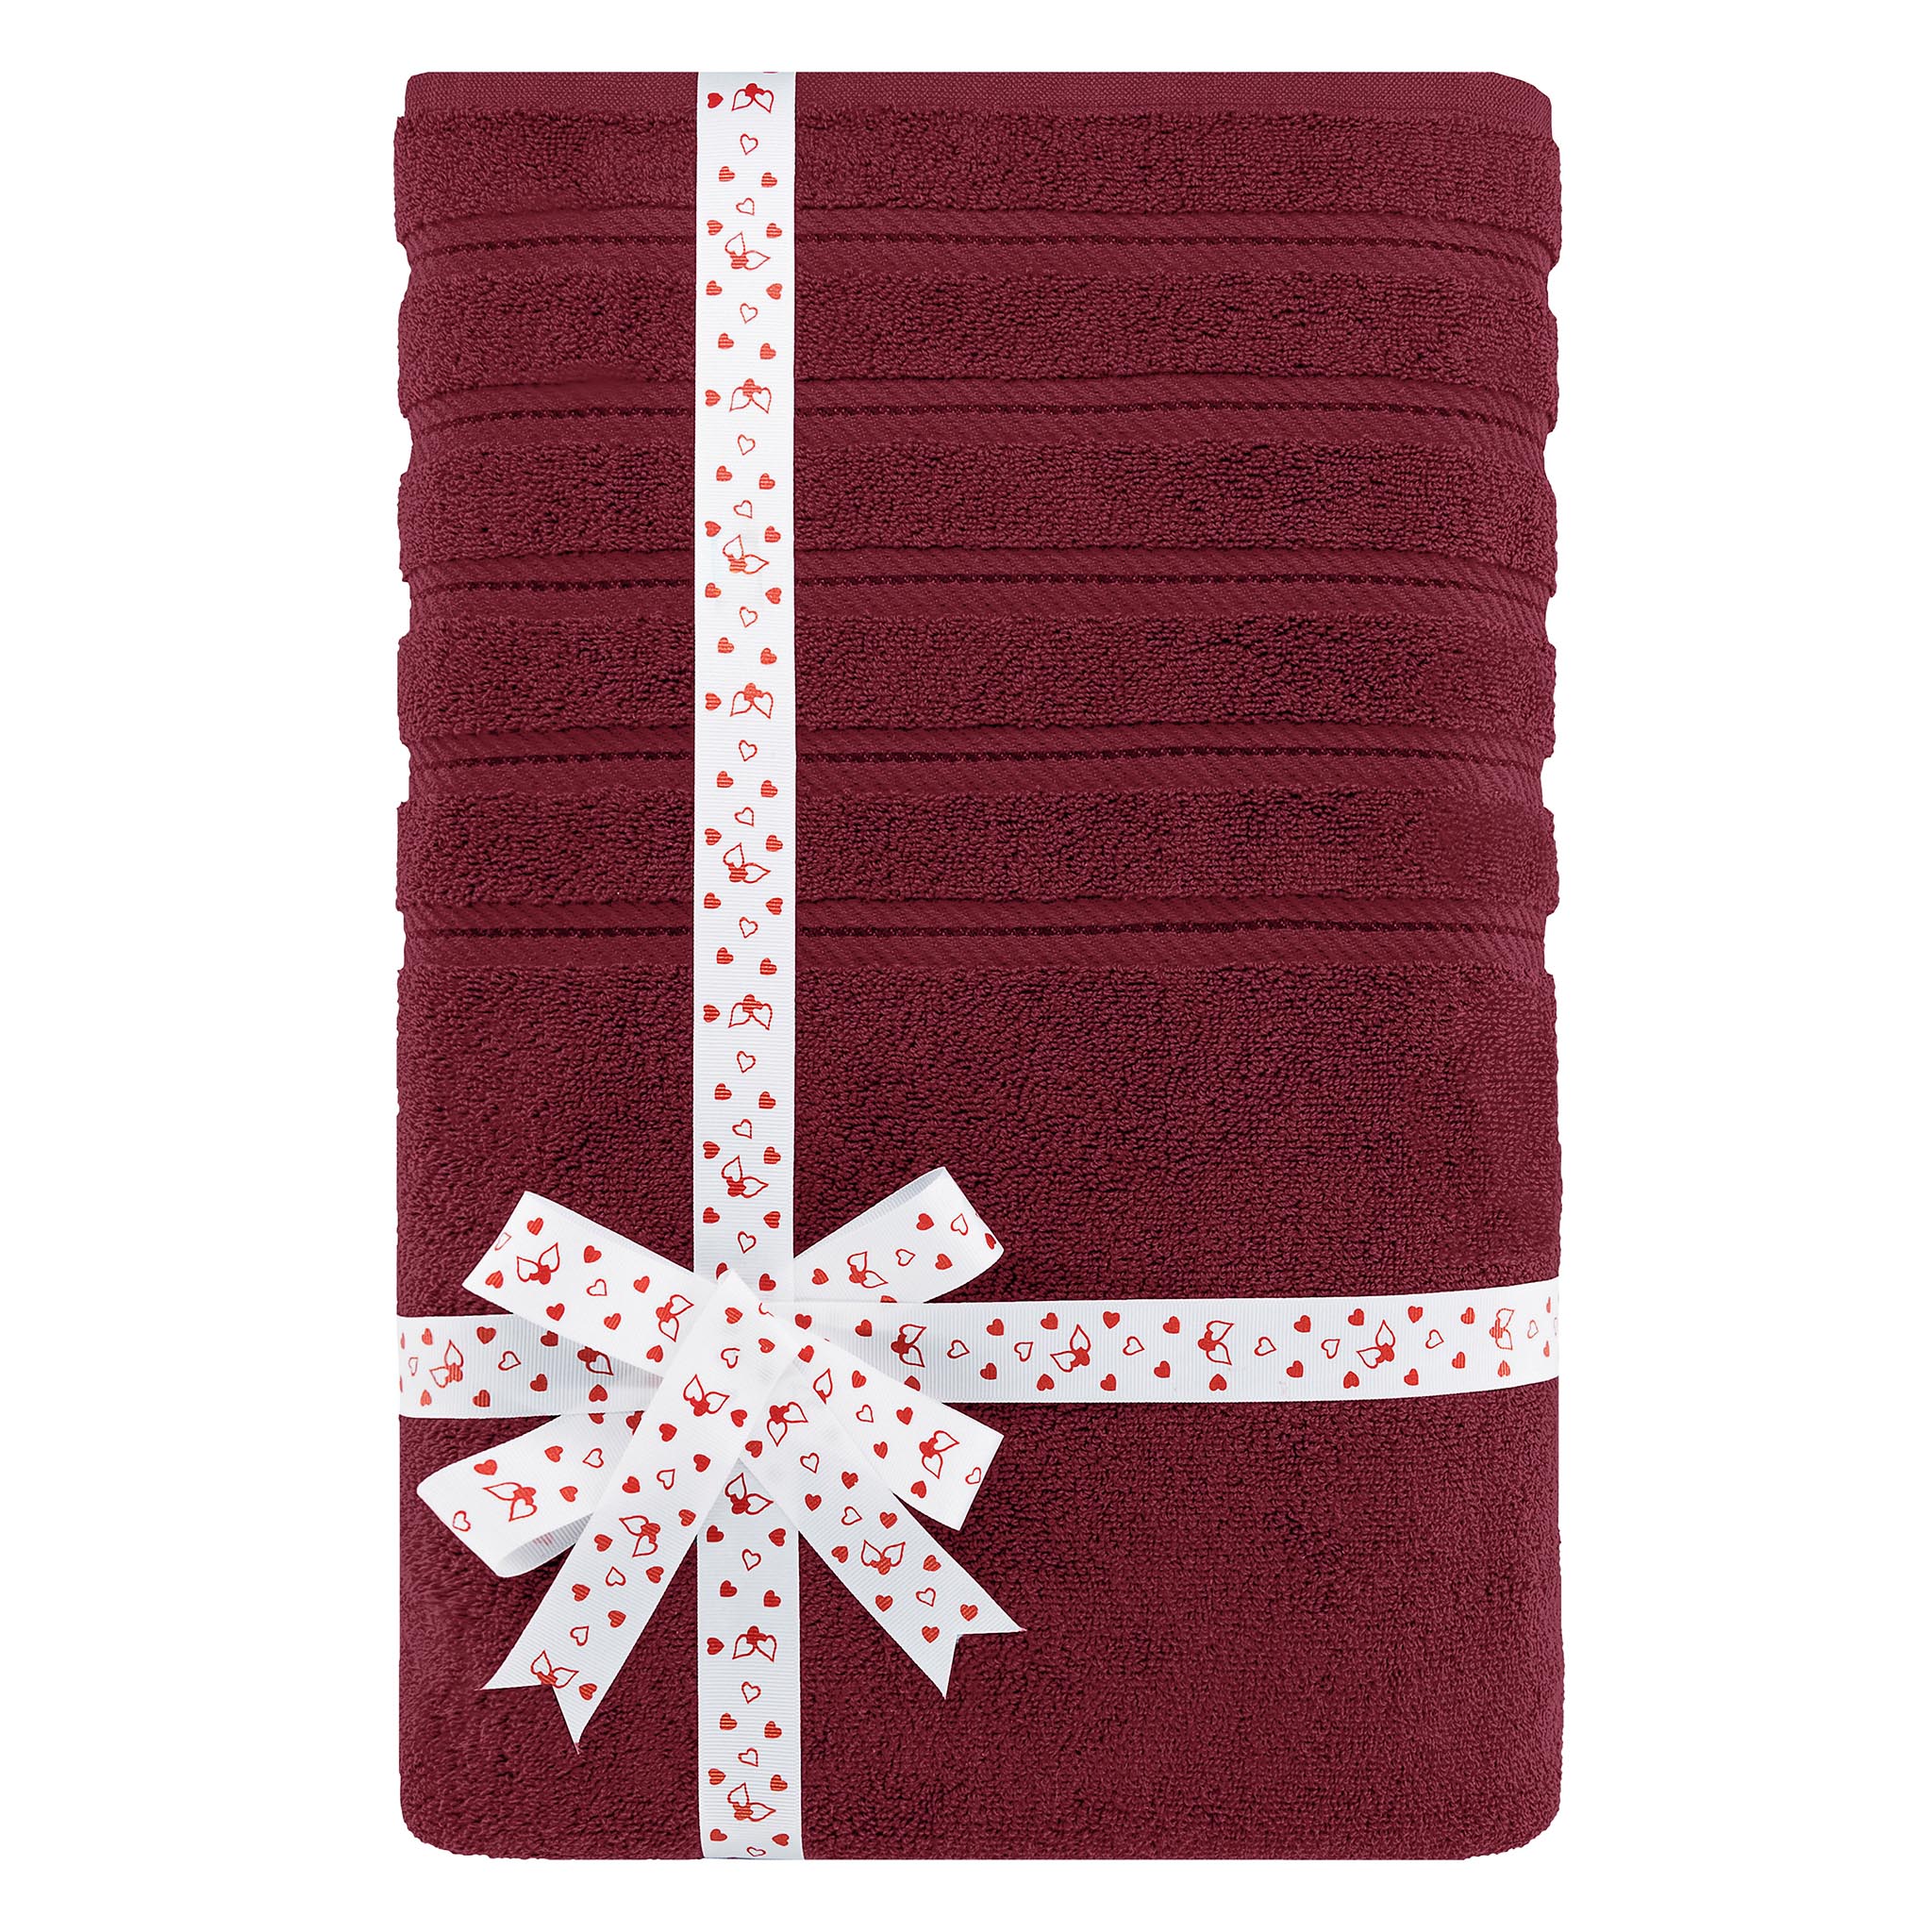 American Soft Linen 35x70 Inch 100% Turkish Cotton Jumbo Bath Sheet bordeaux-red-3